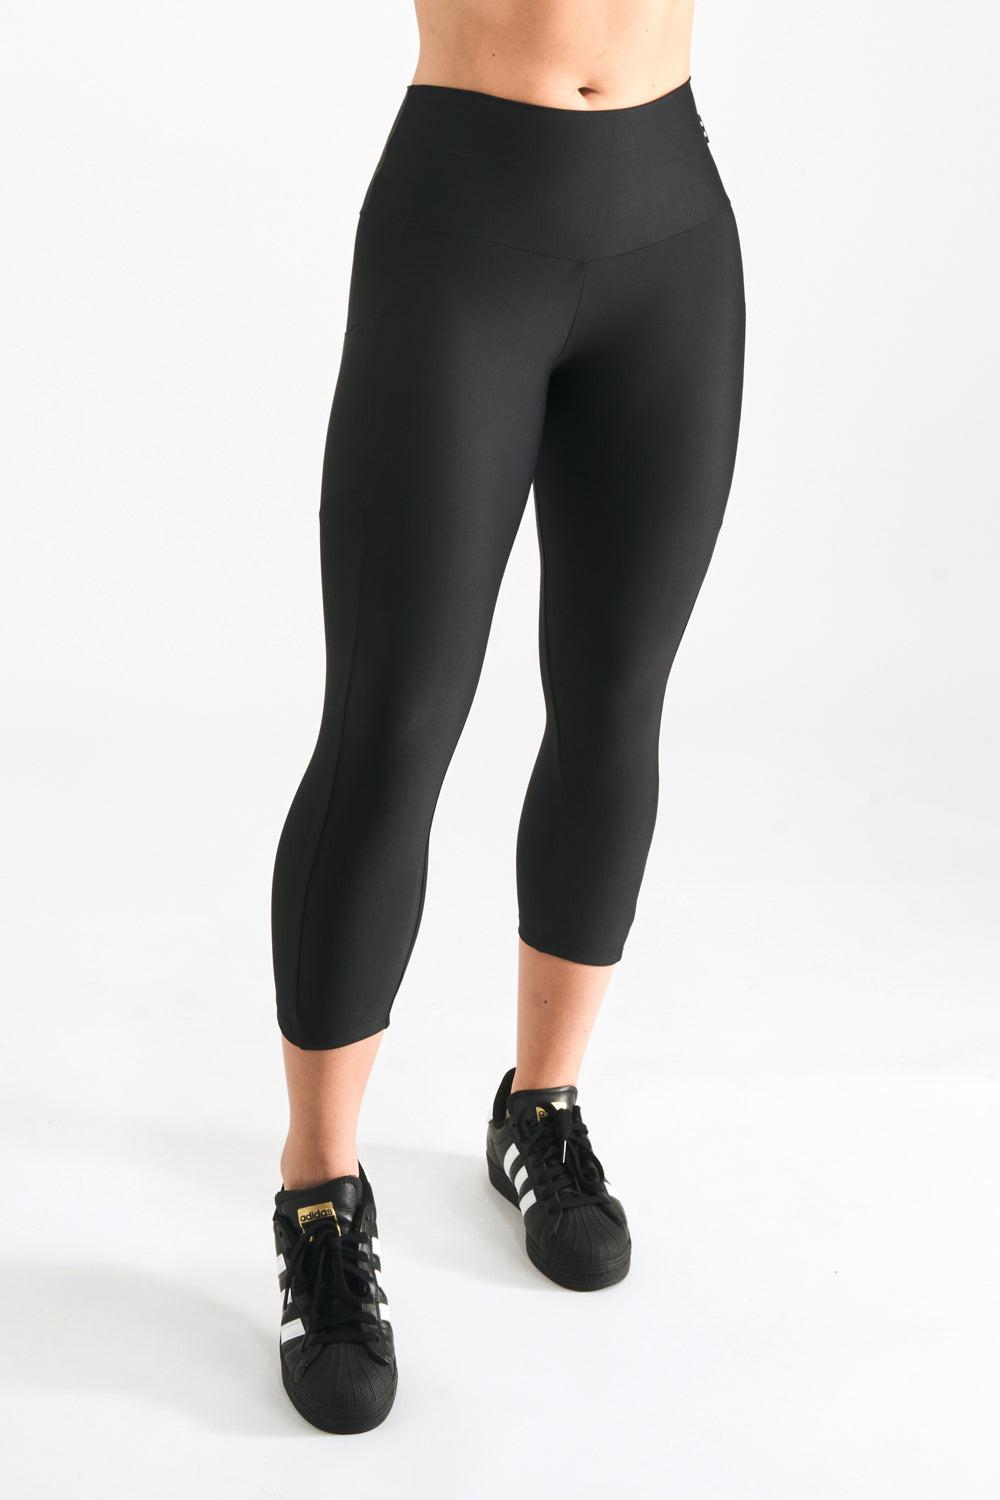 Black Performance - Panel Pocket High Waisted Capri Leggings-Activewear-Exoticathletica